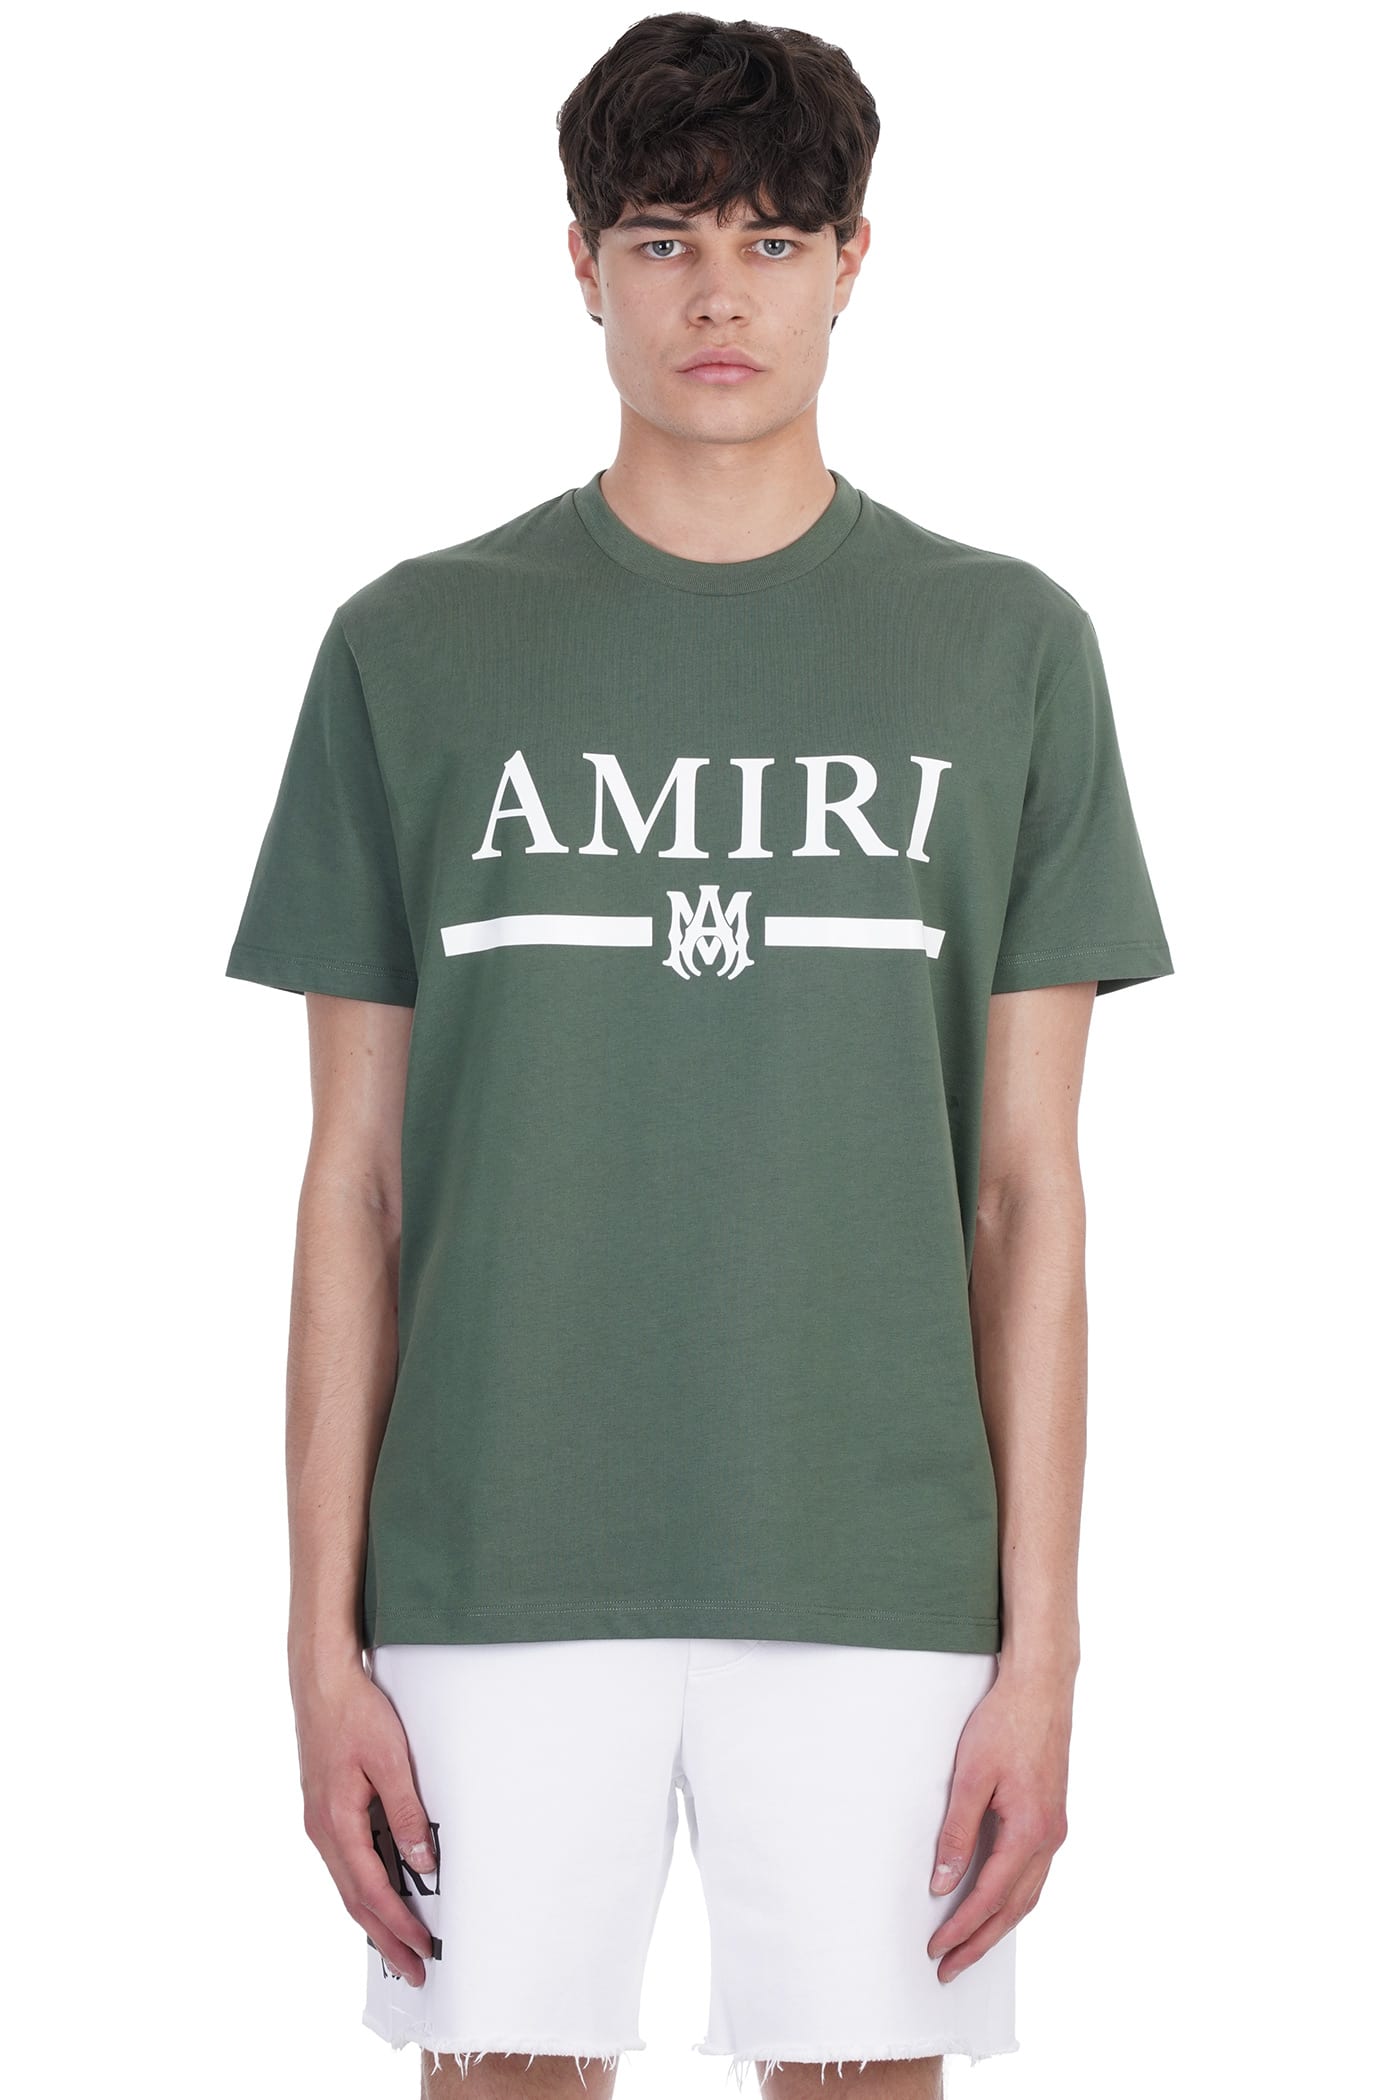 AMIRI T-SHIRT IN GREEN COTTON